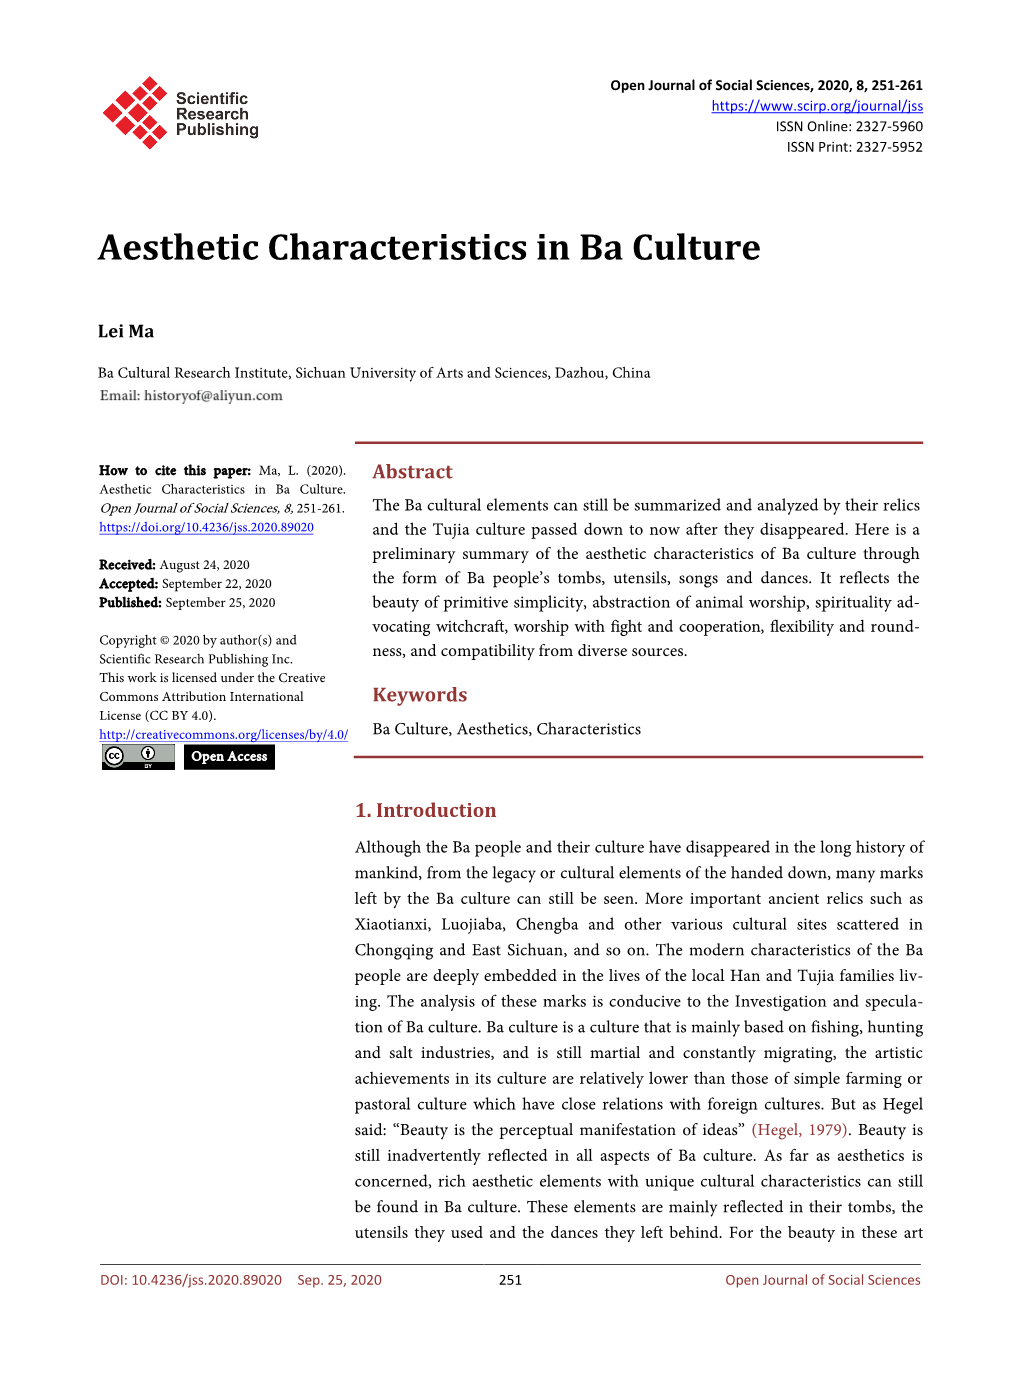 Aesthetic Characteristics in Ba Culture